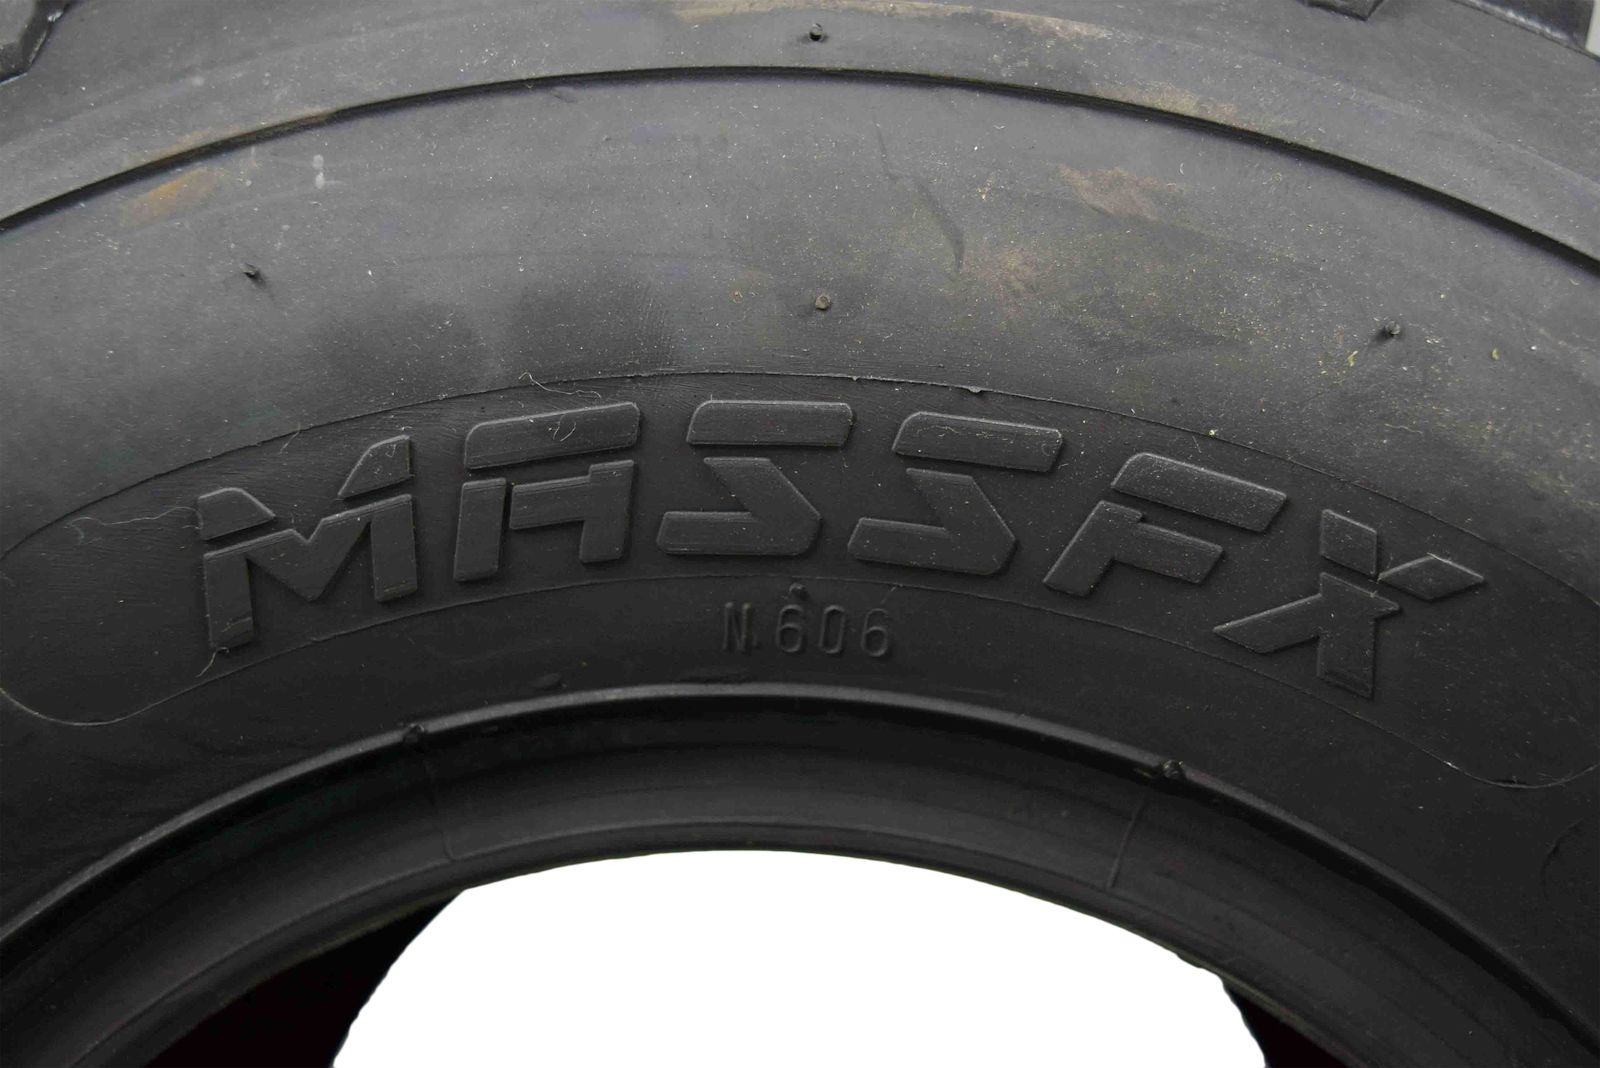 MASSFX 20x11-9 20" Rear ATV Tire Single Tire 4 PLY 20x11x9